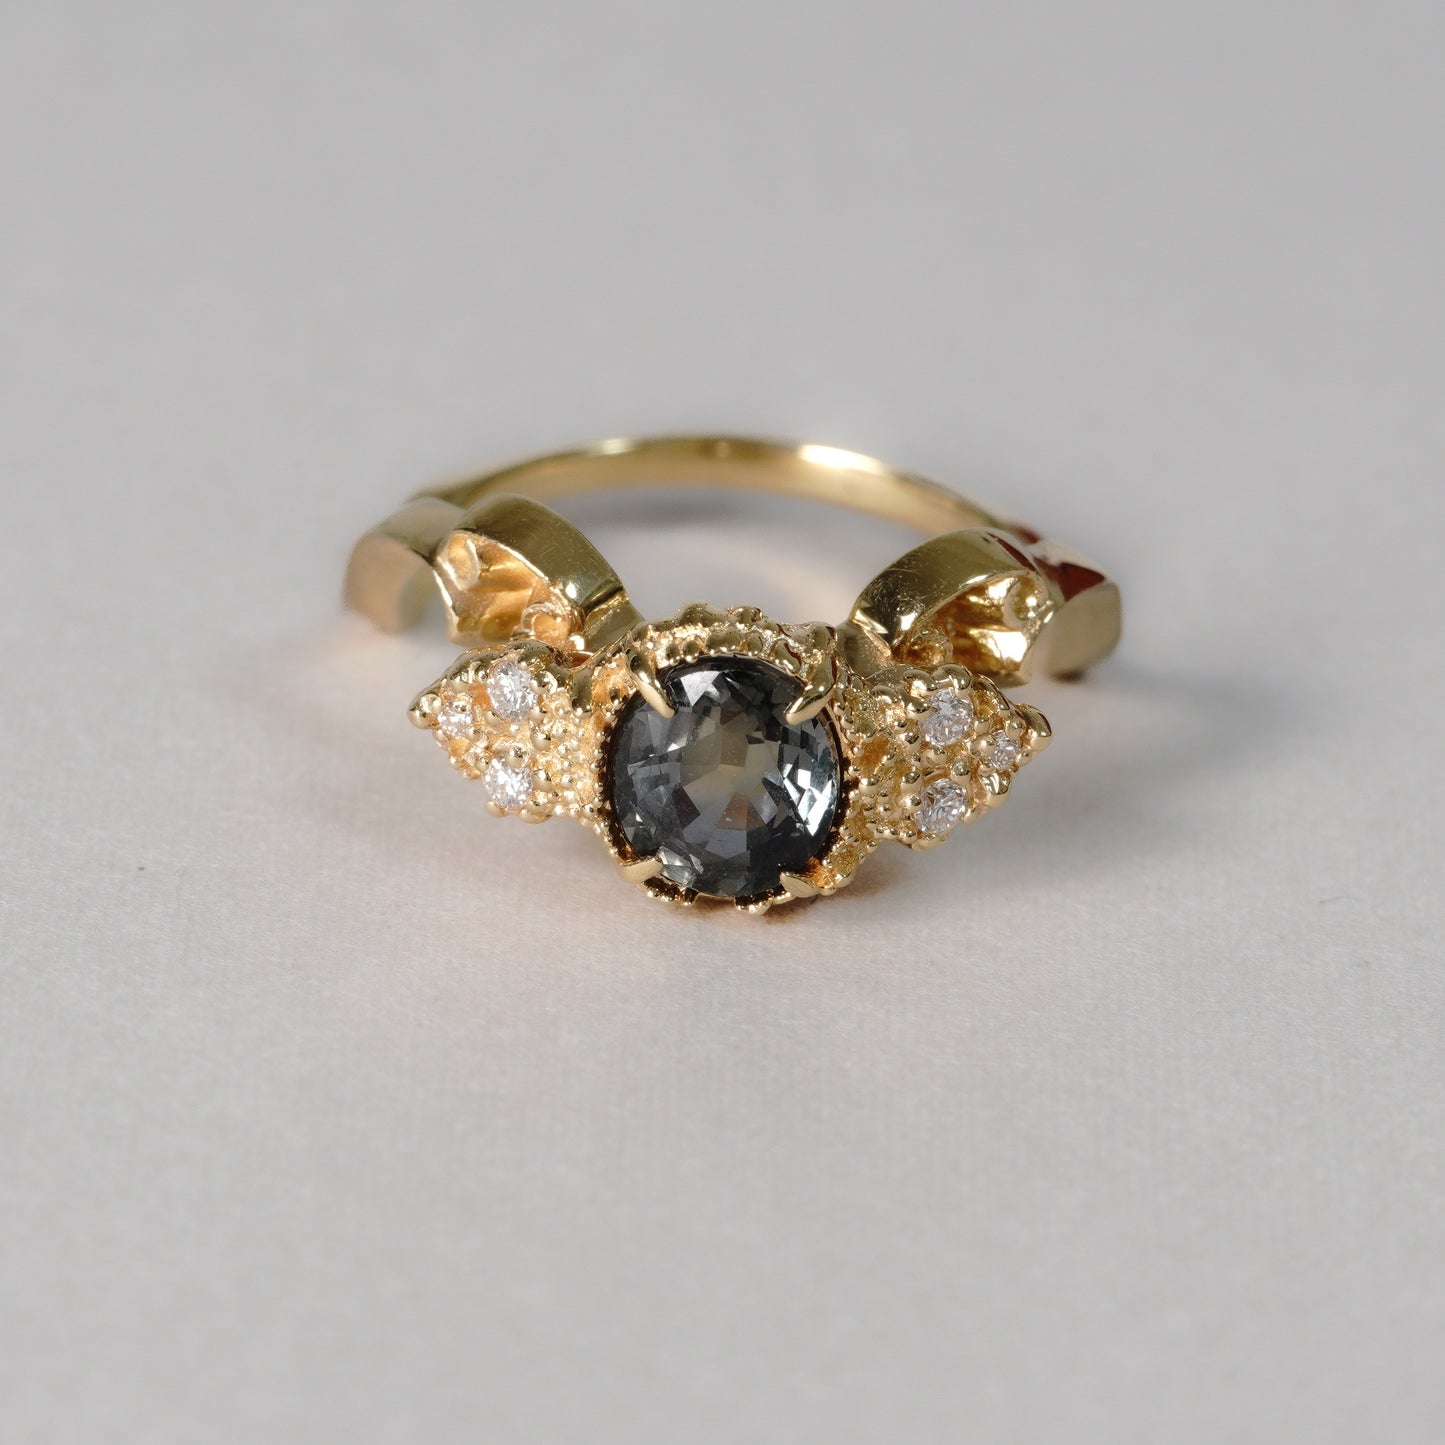 001 Color change sapphire / Diamond Ring